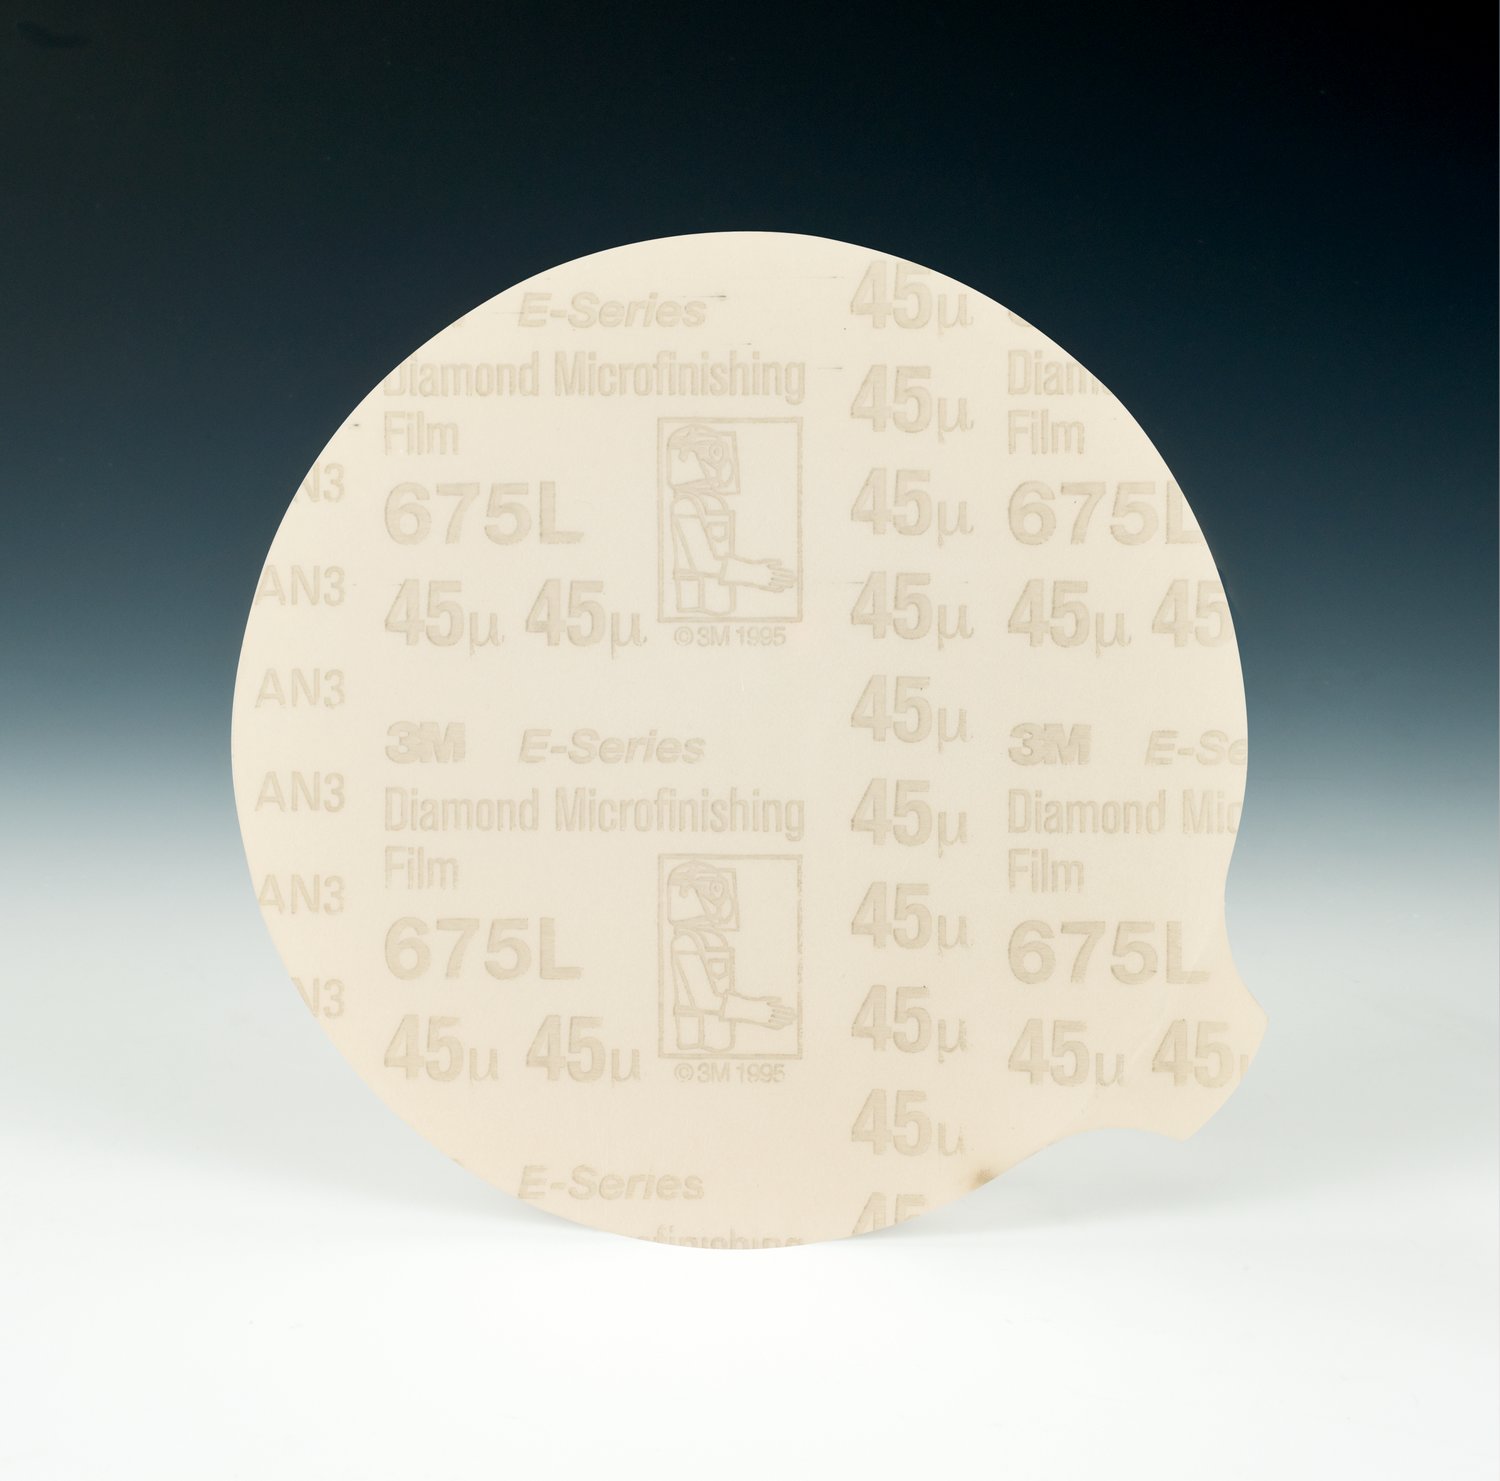 7100218052 - 3M Hookit Diamond Microfinishing Film Disc 675L, 45 Mic 5MIL, Gray, 5
in x NH, Die 500LG